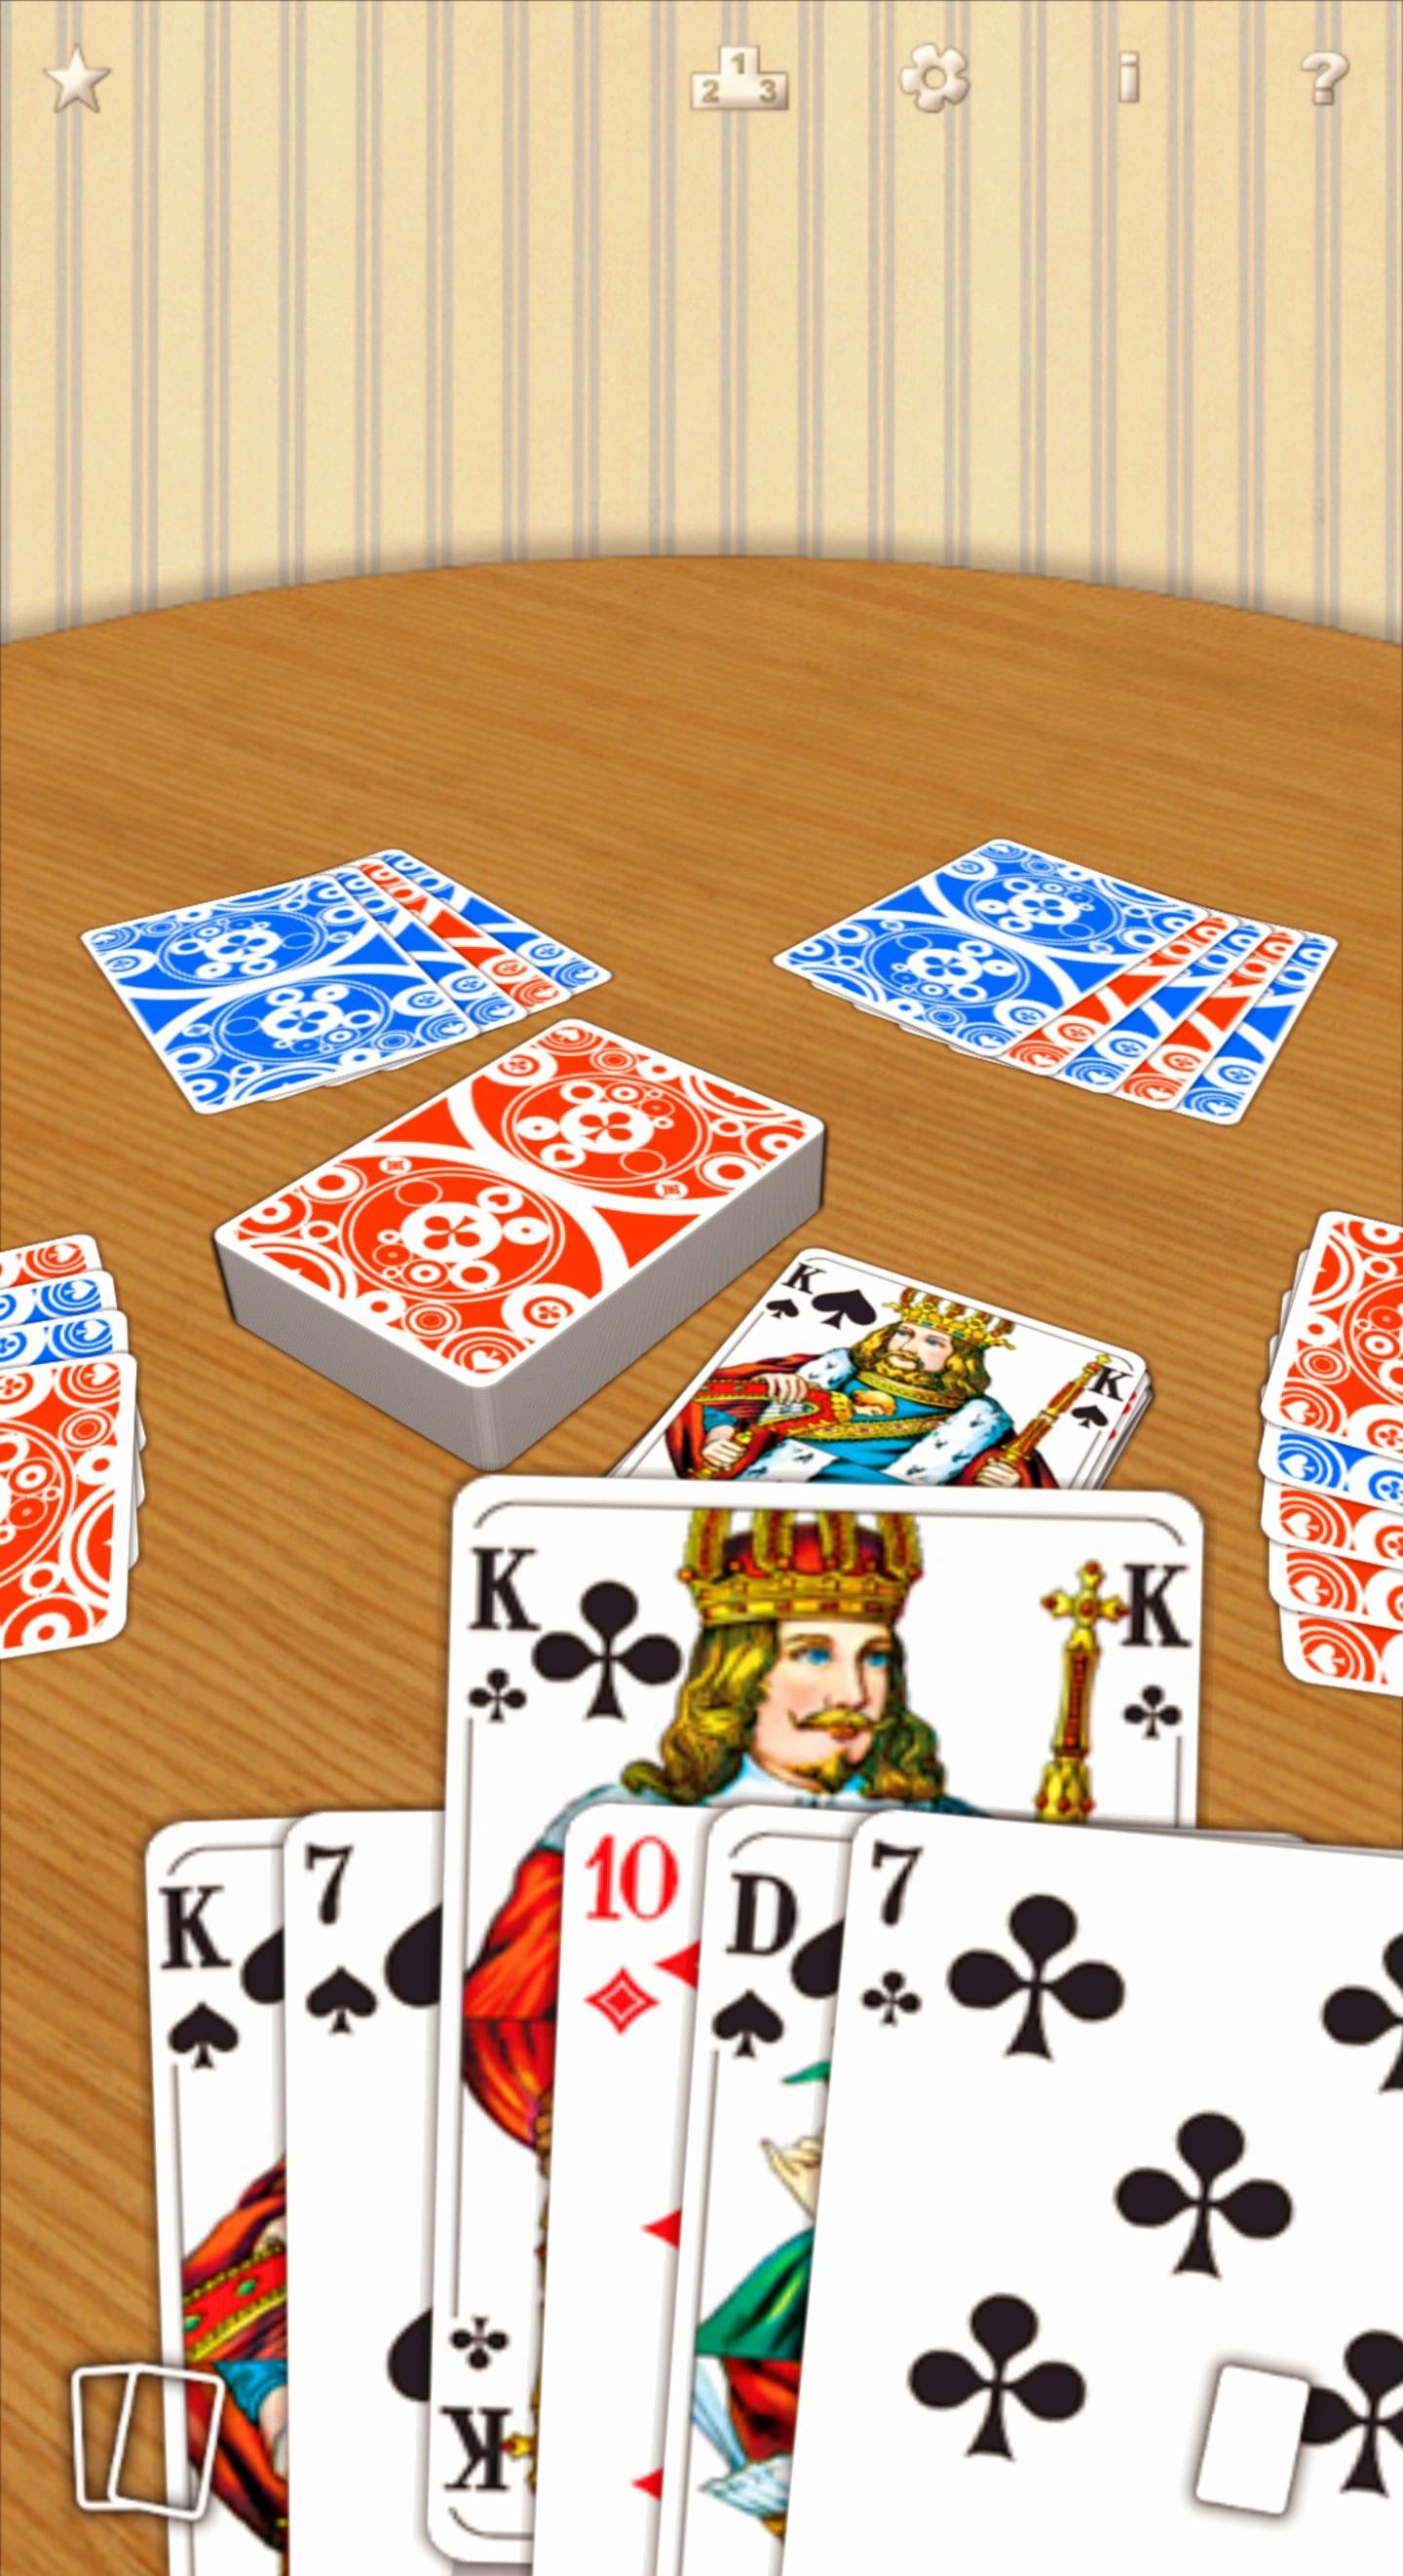 Crazy Eights free card game 1.6.96 Screenshot 10